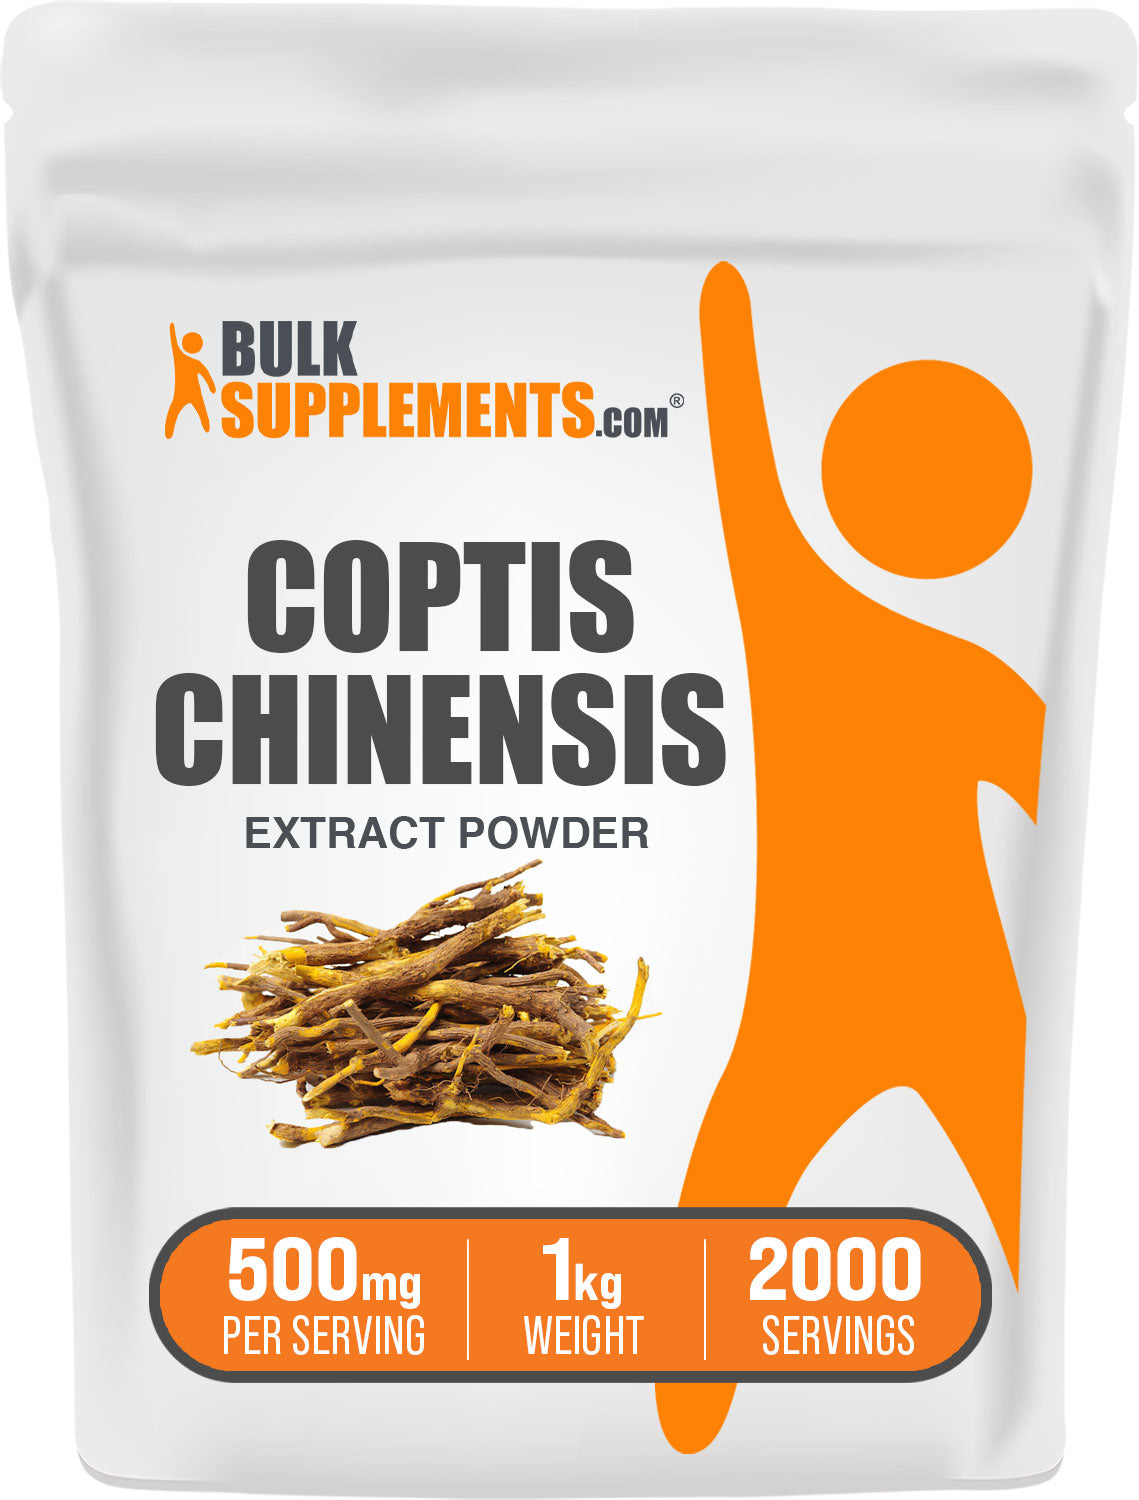 1kg of coptis chinensis